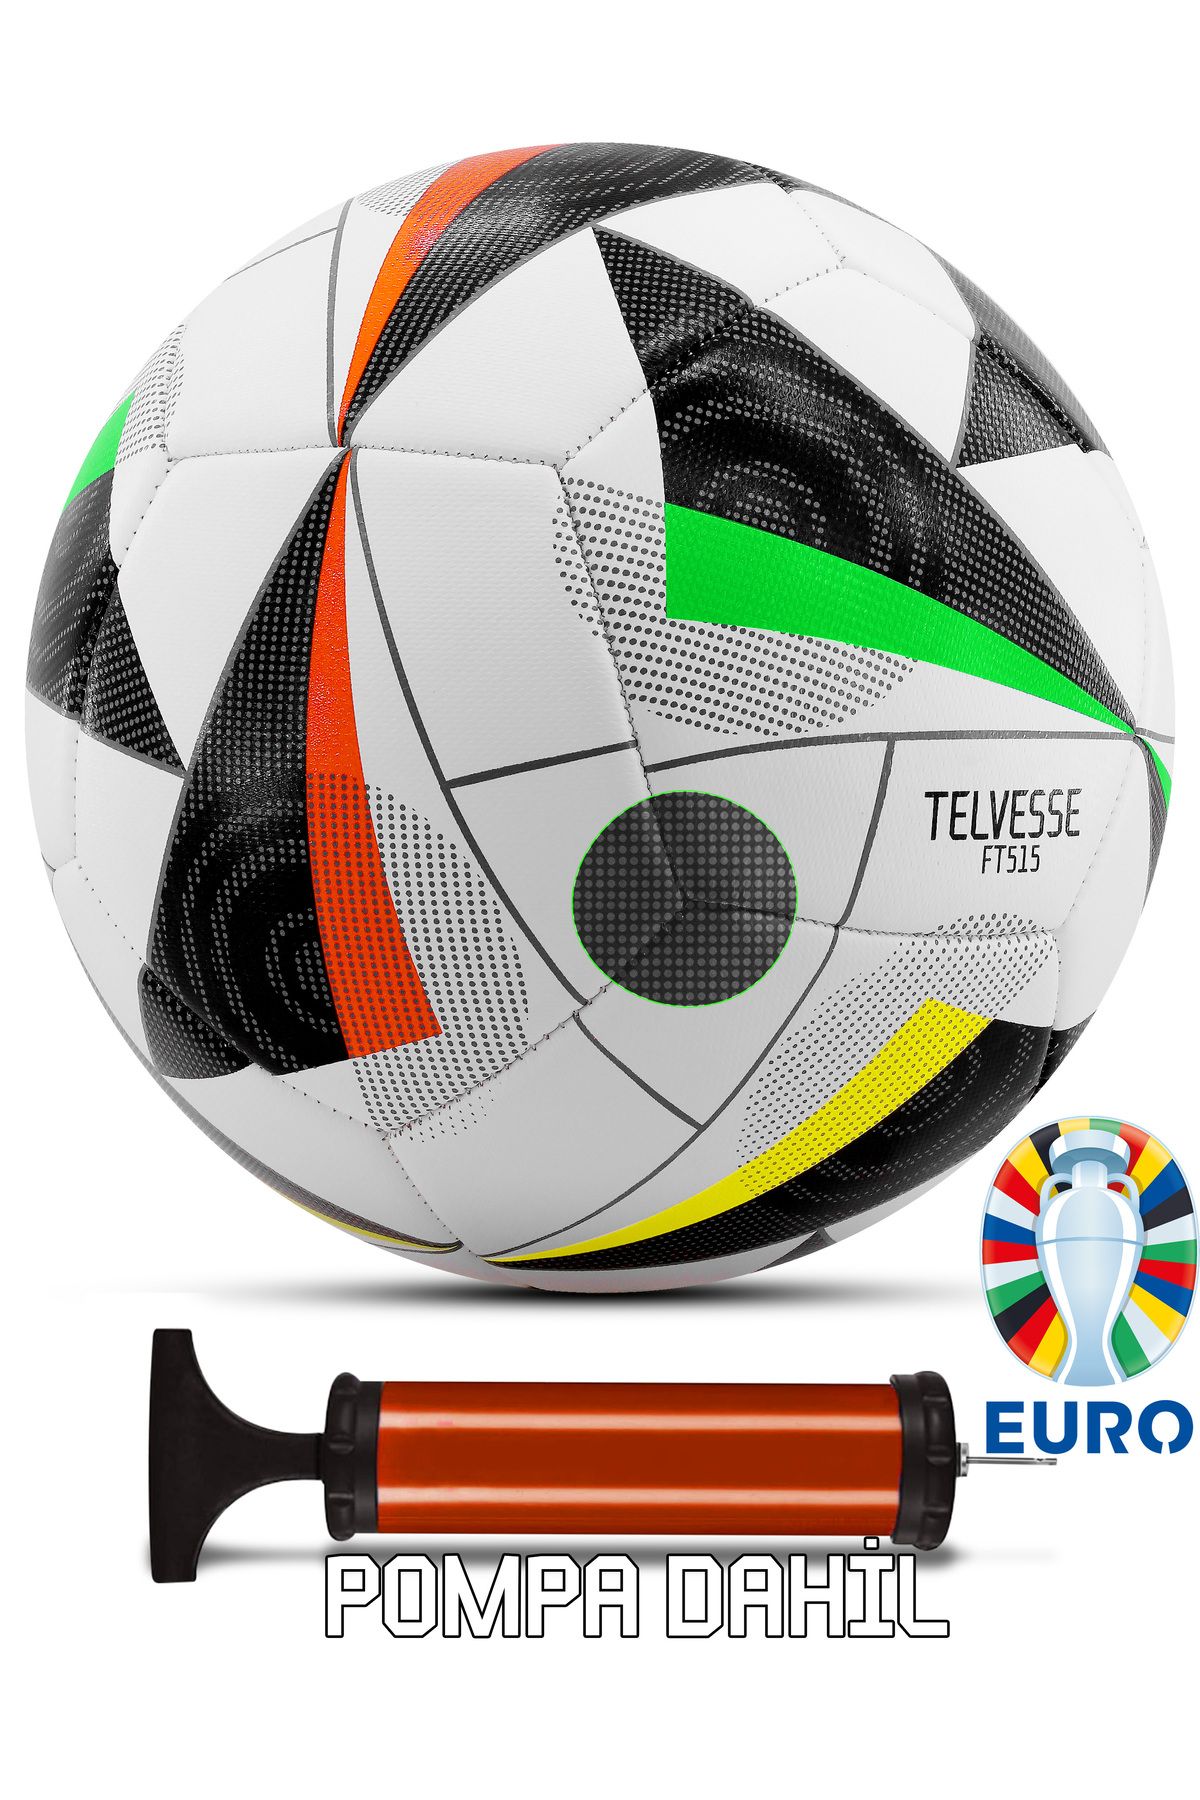 Telvesse Orijinal Futbol Topu Avrupa Şişirme Pompalı Sert Zemin Halı Saha Futbol Topu Hibrit No:5